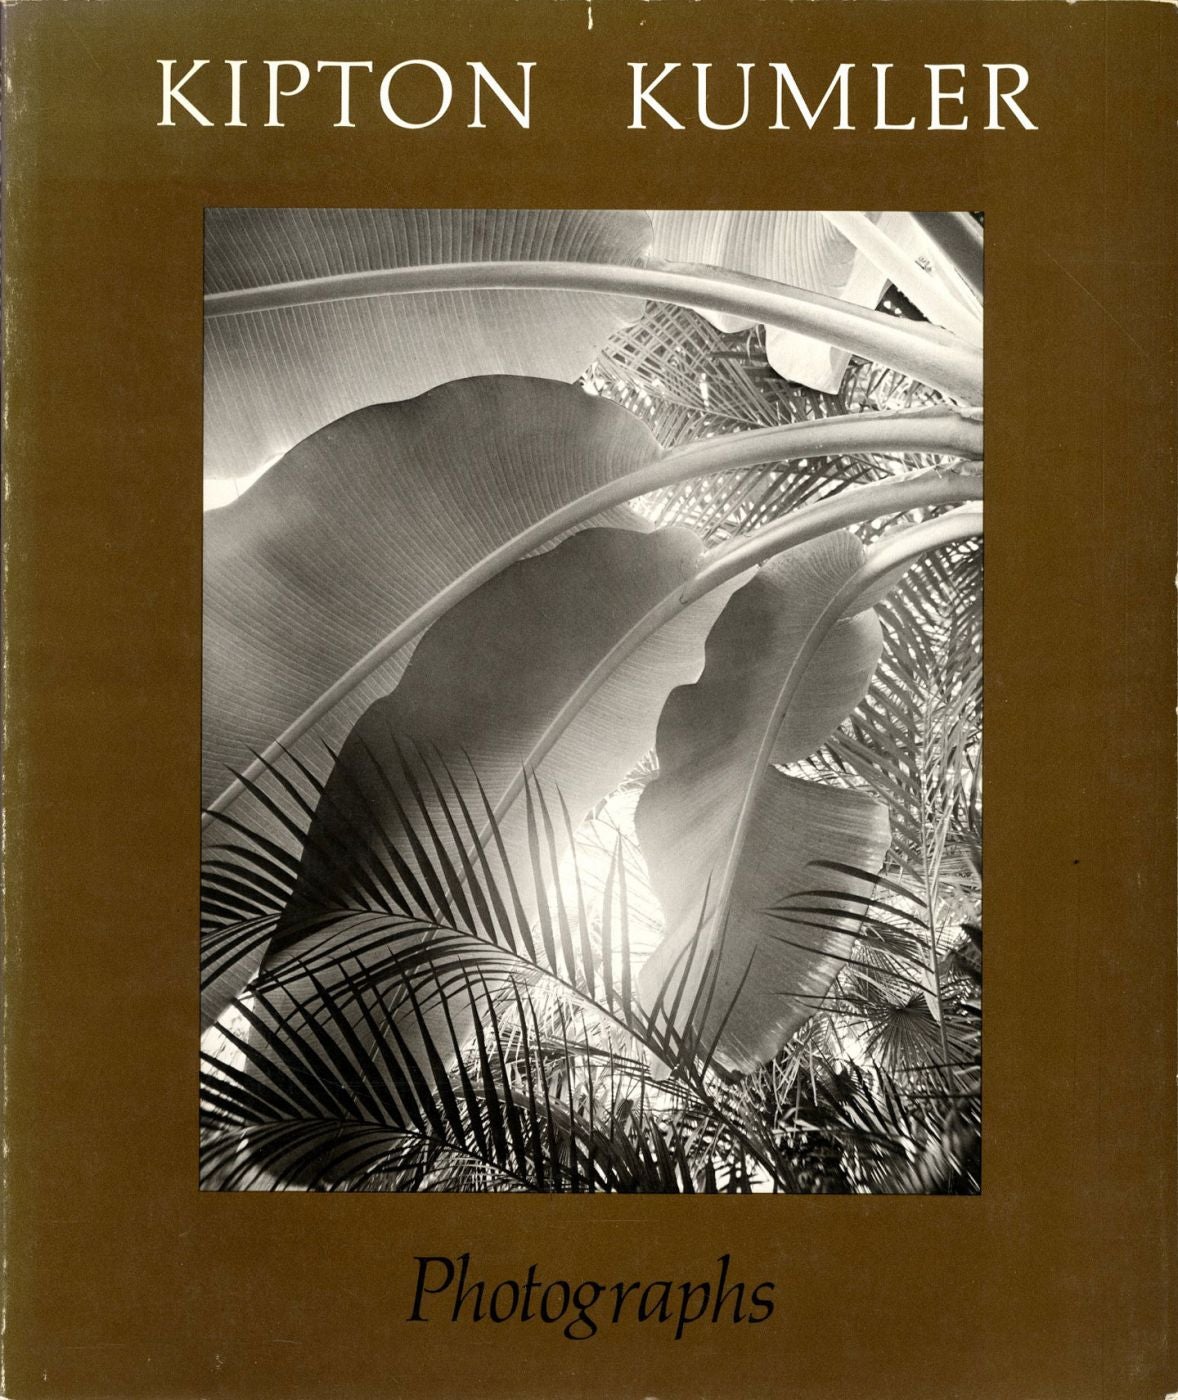 Kipton Kumler: Photographs (Contemporary Photographers Series #2)